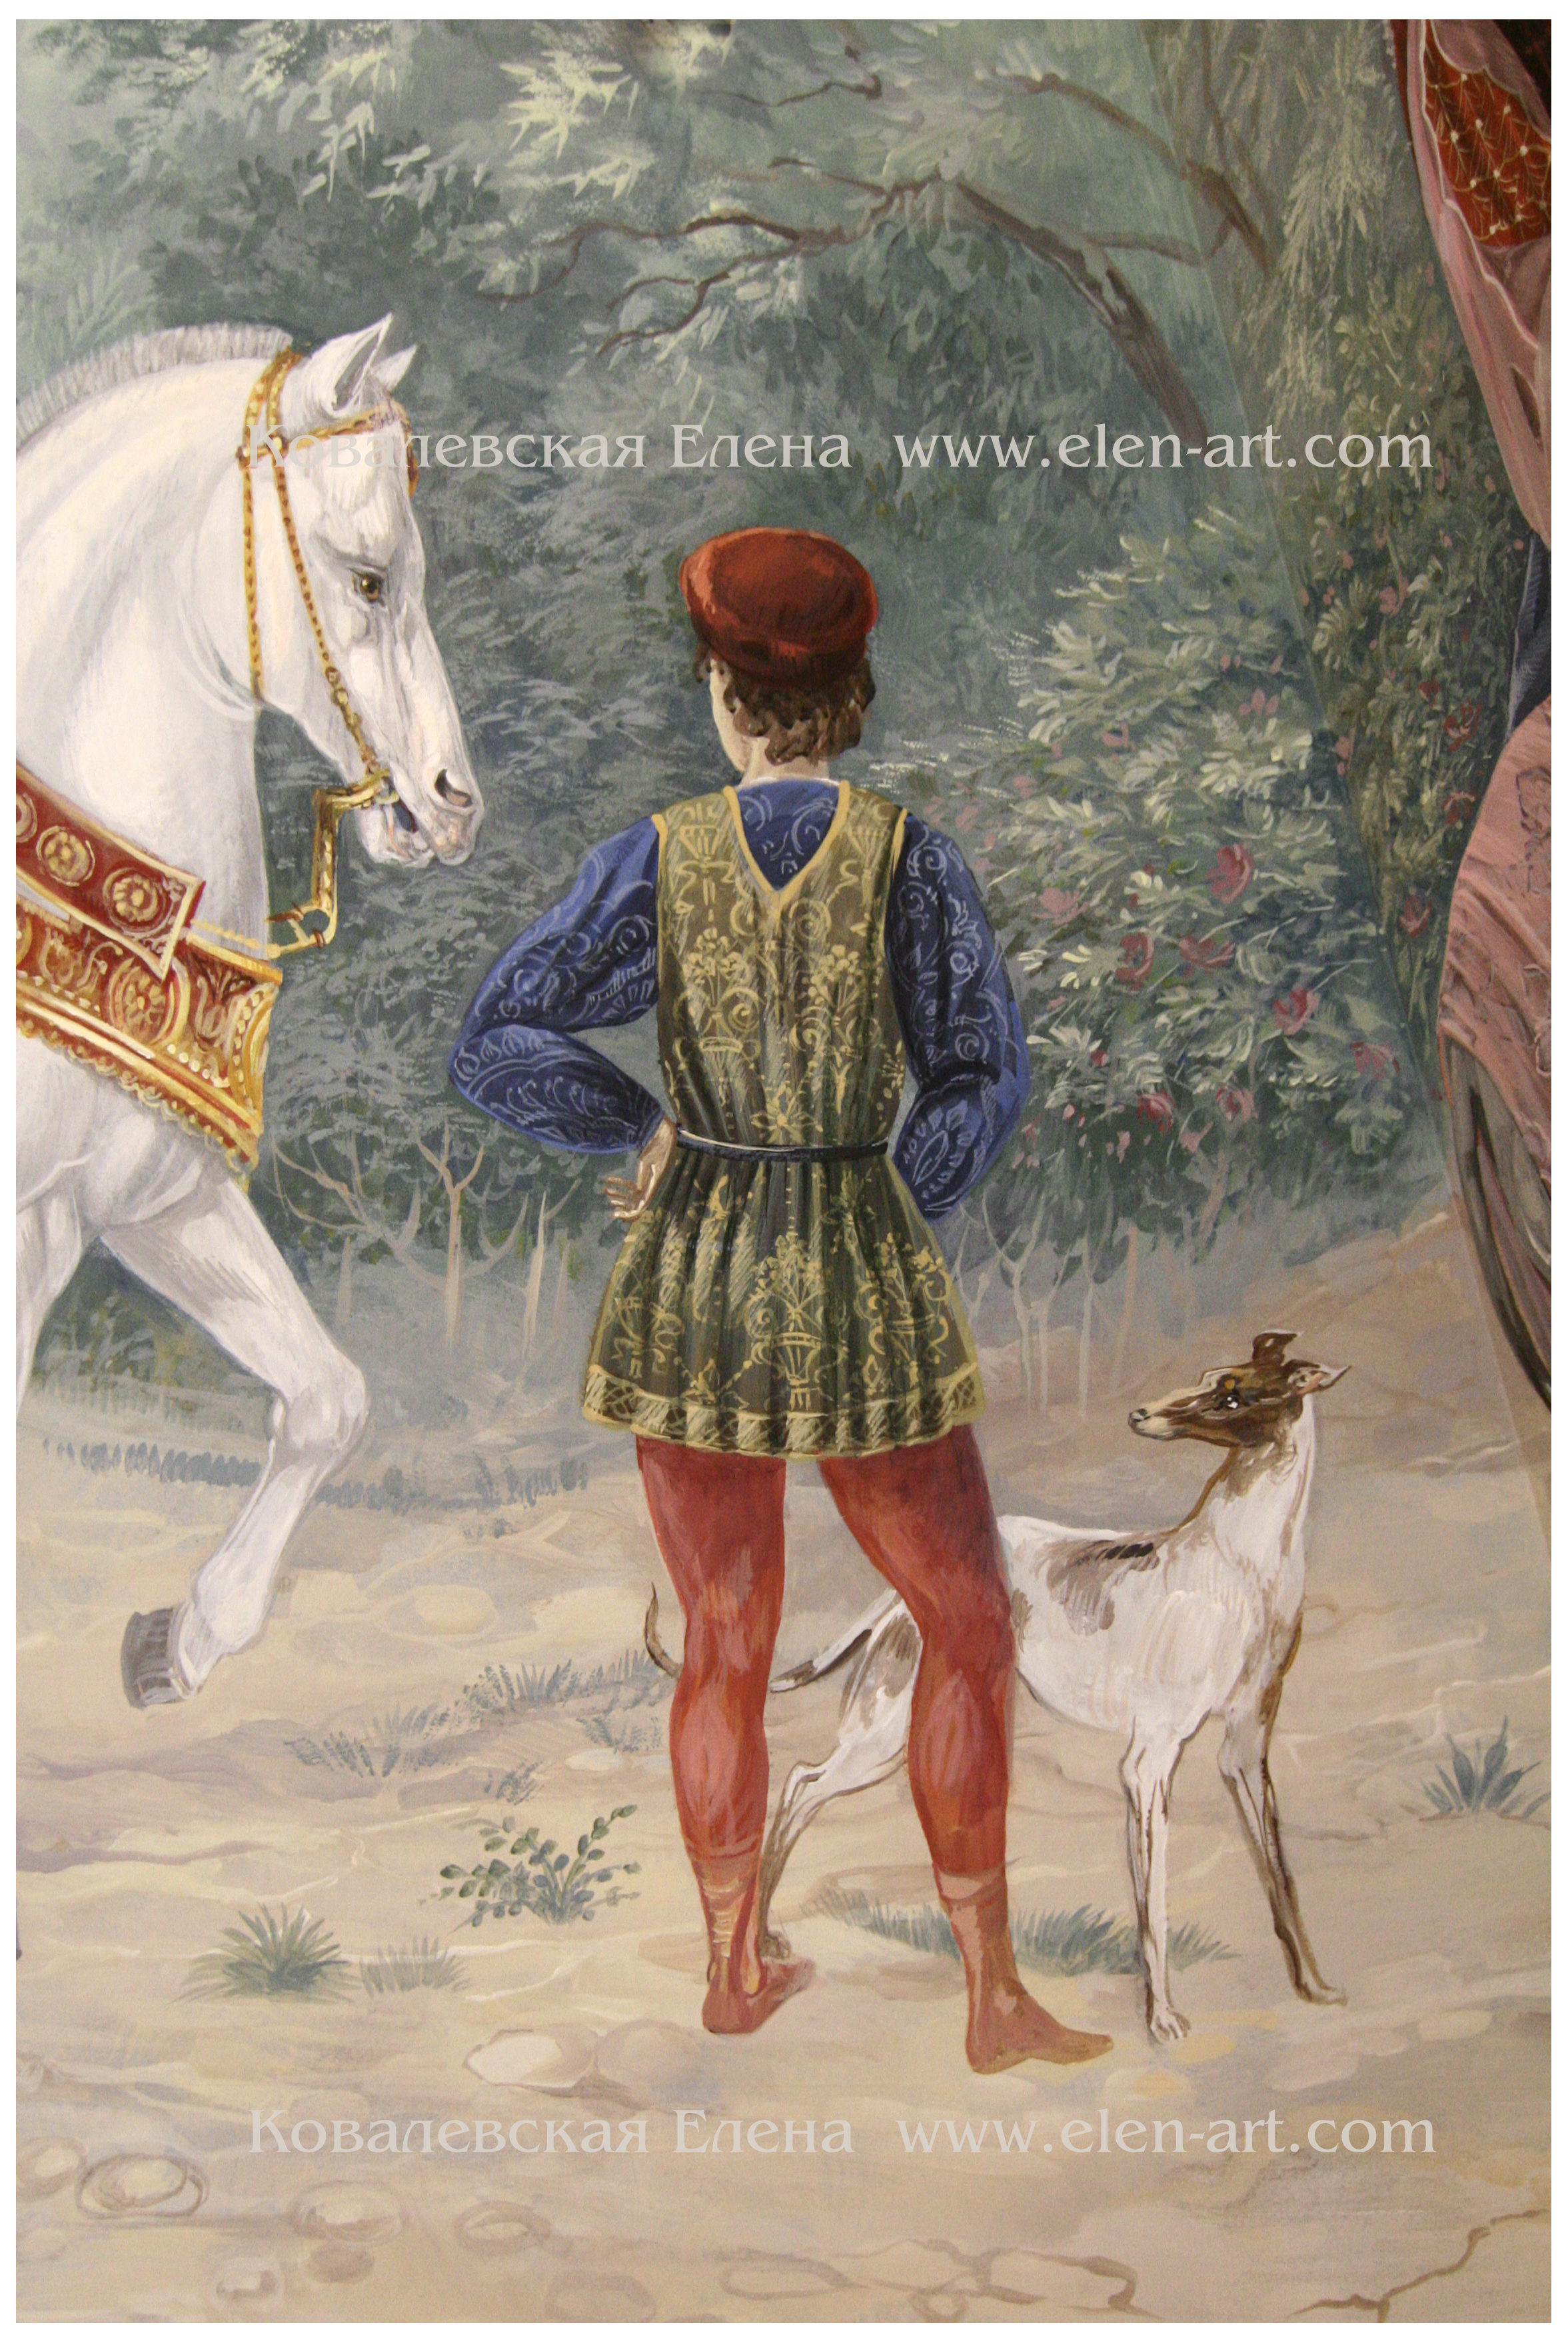 винтажная фреска с конями и всадниками